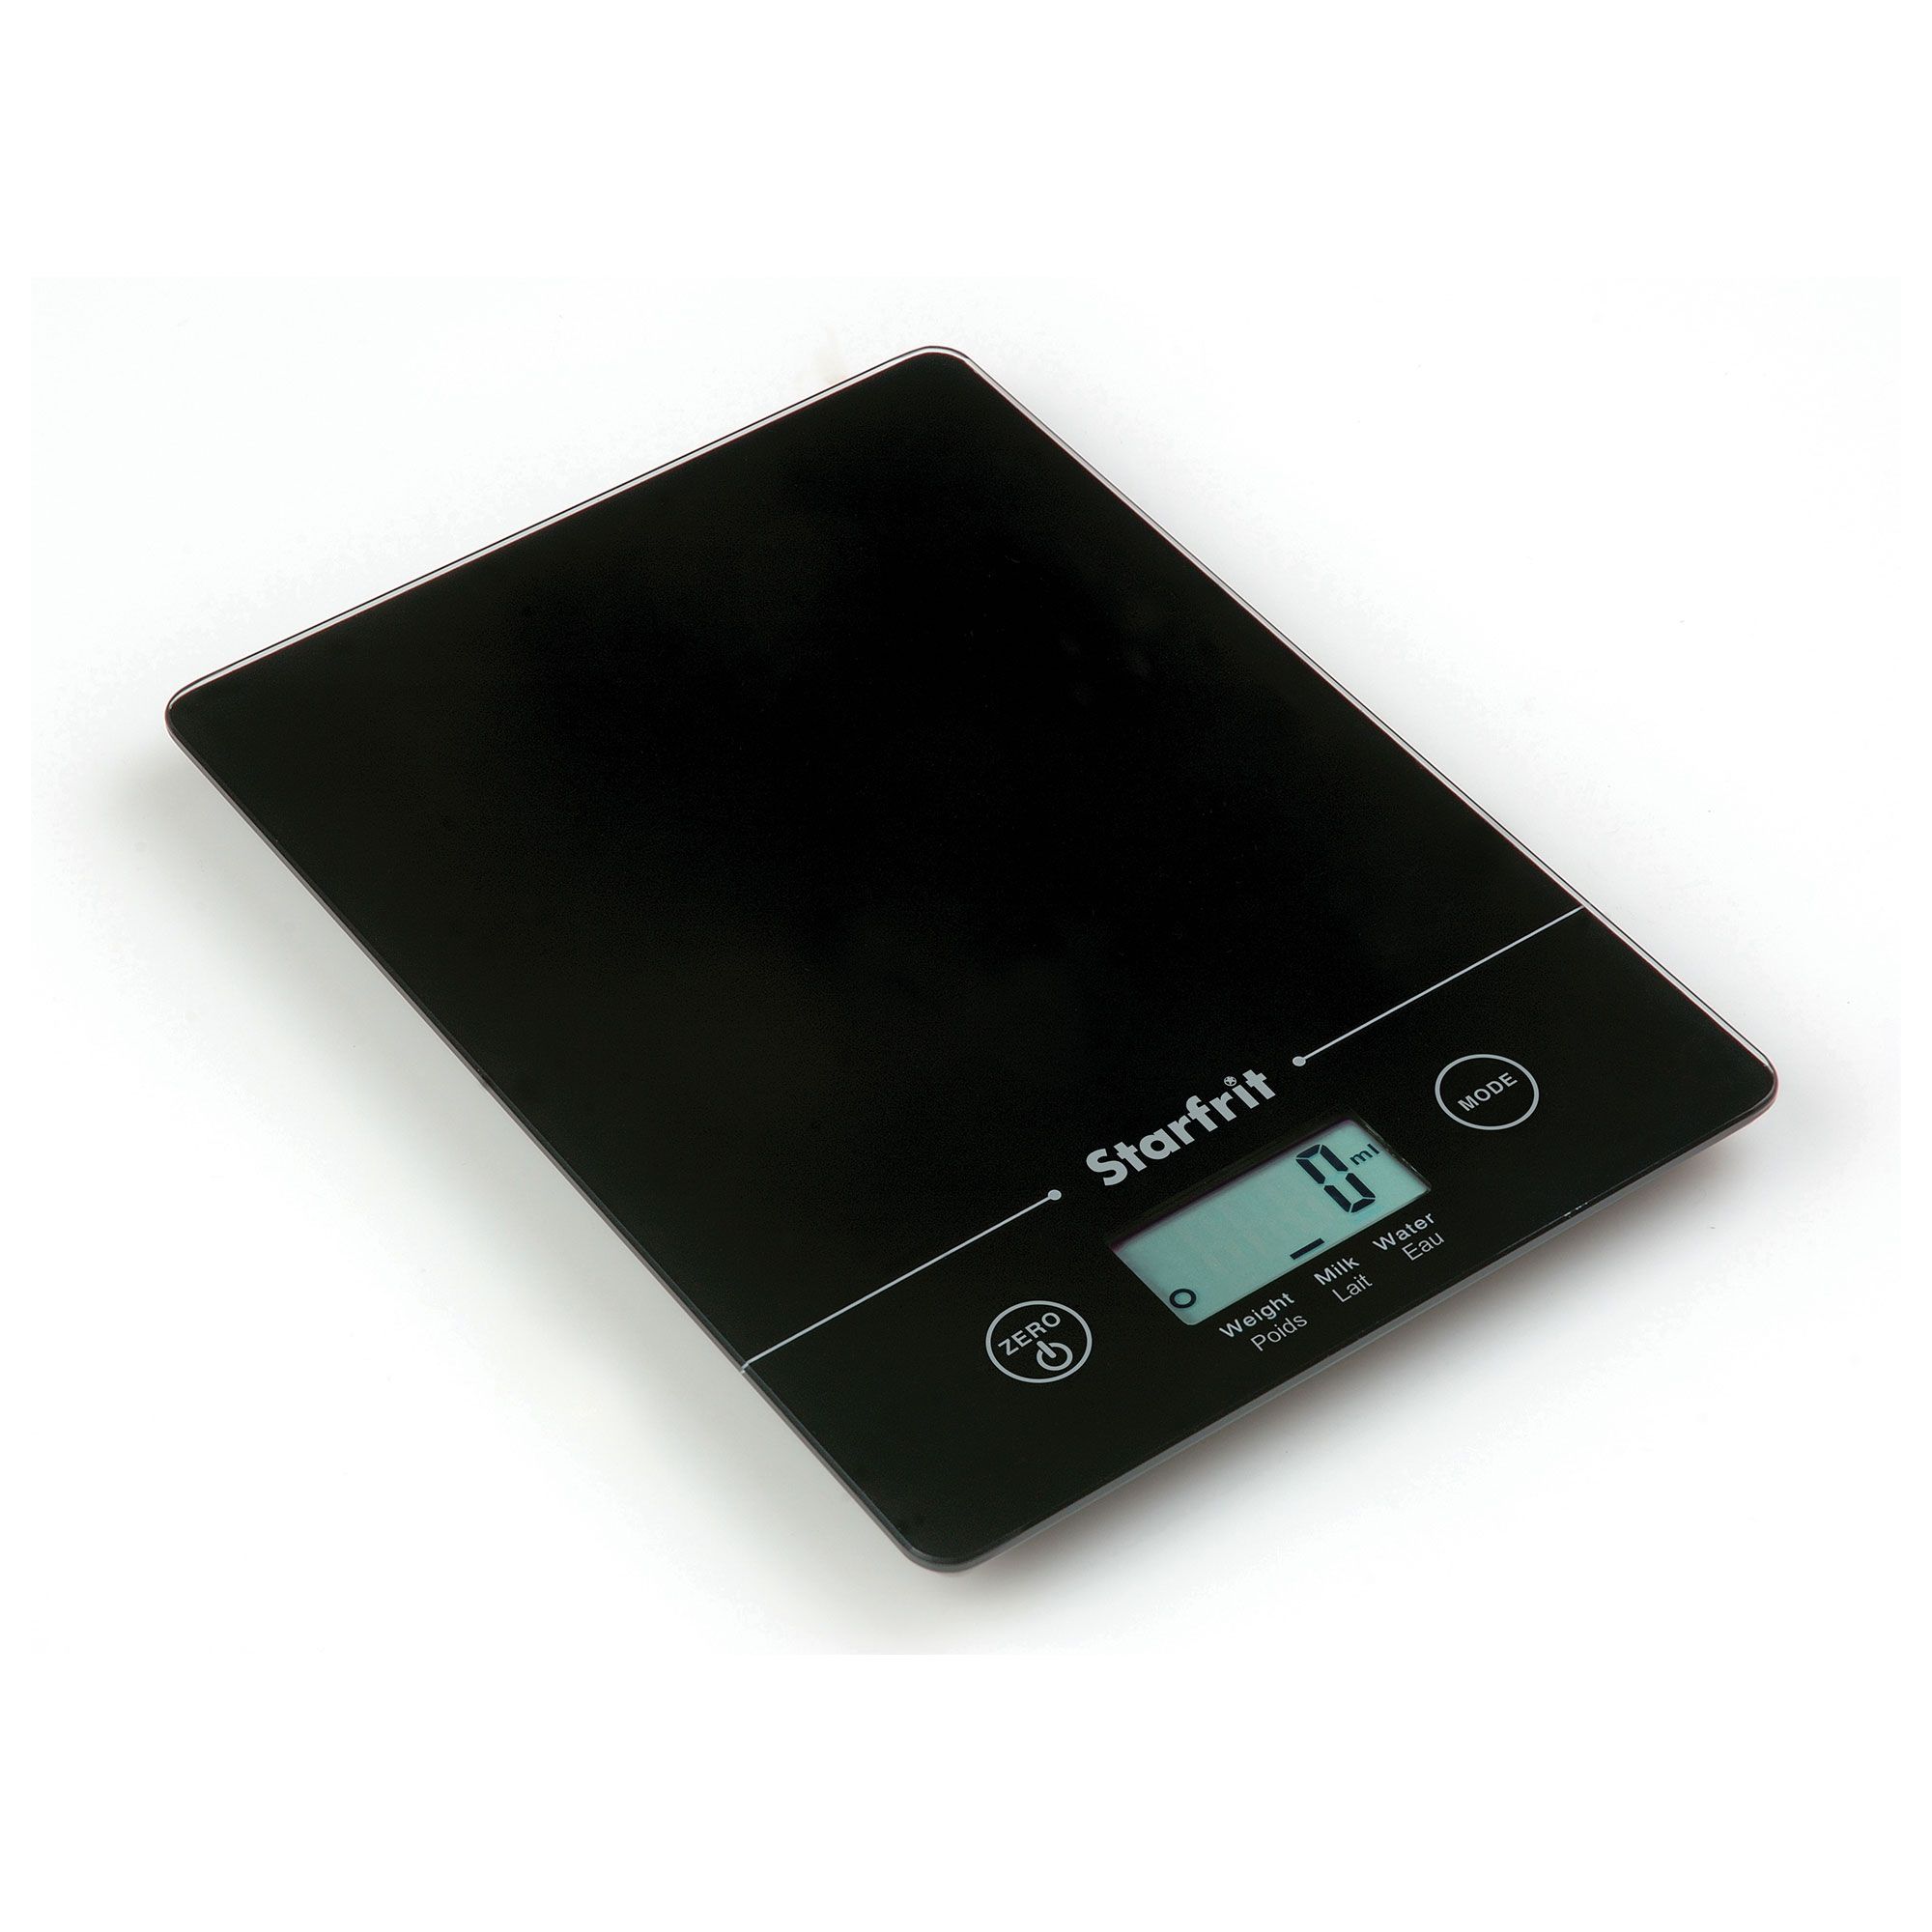 Starfrit High Precision Scale 1.06 lb 500 g Maximum Weight